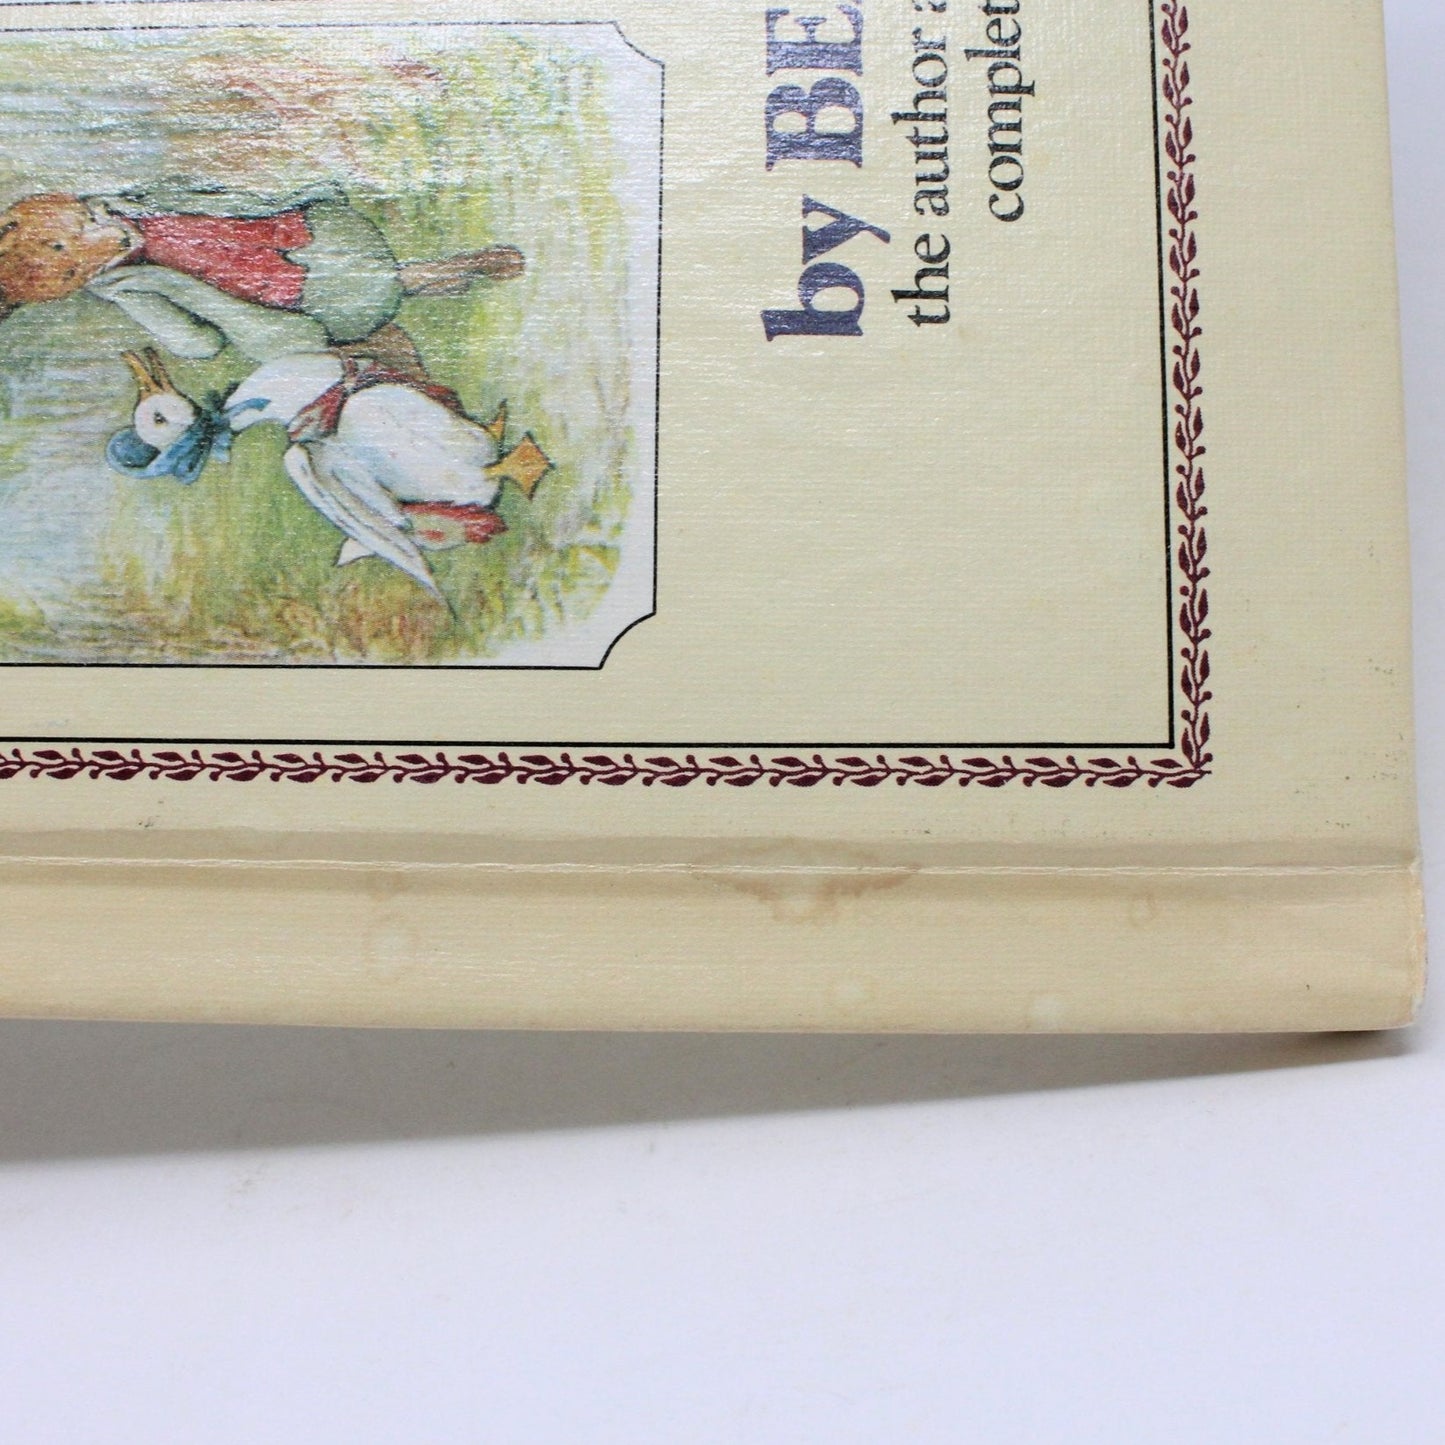 Children's Book, Giant Treasure of Beatrix Potter, Hardcover, Vintage 1984